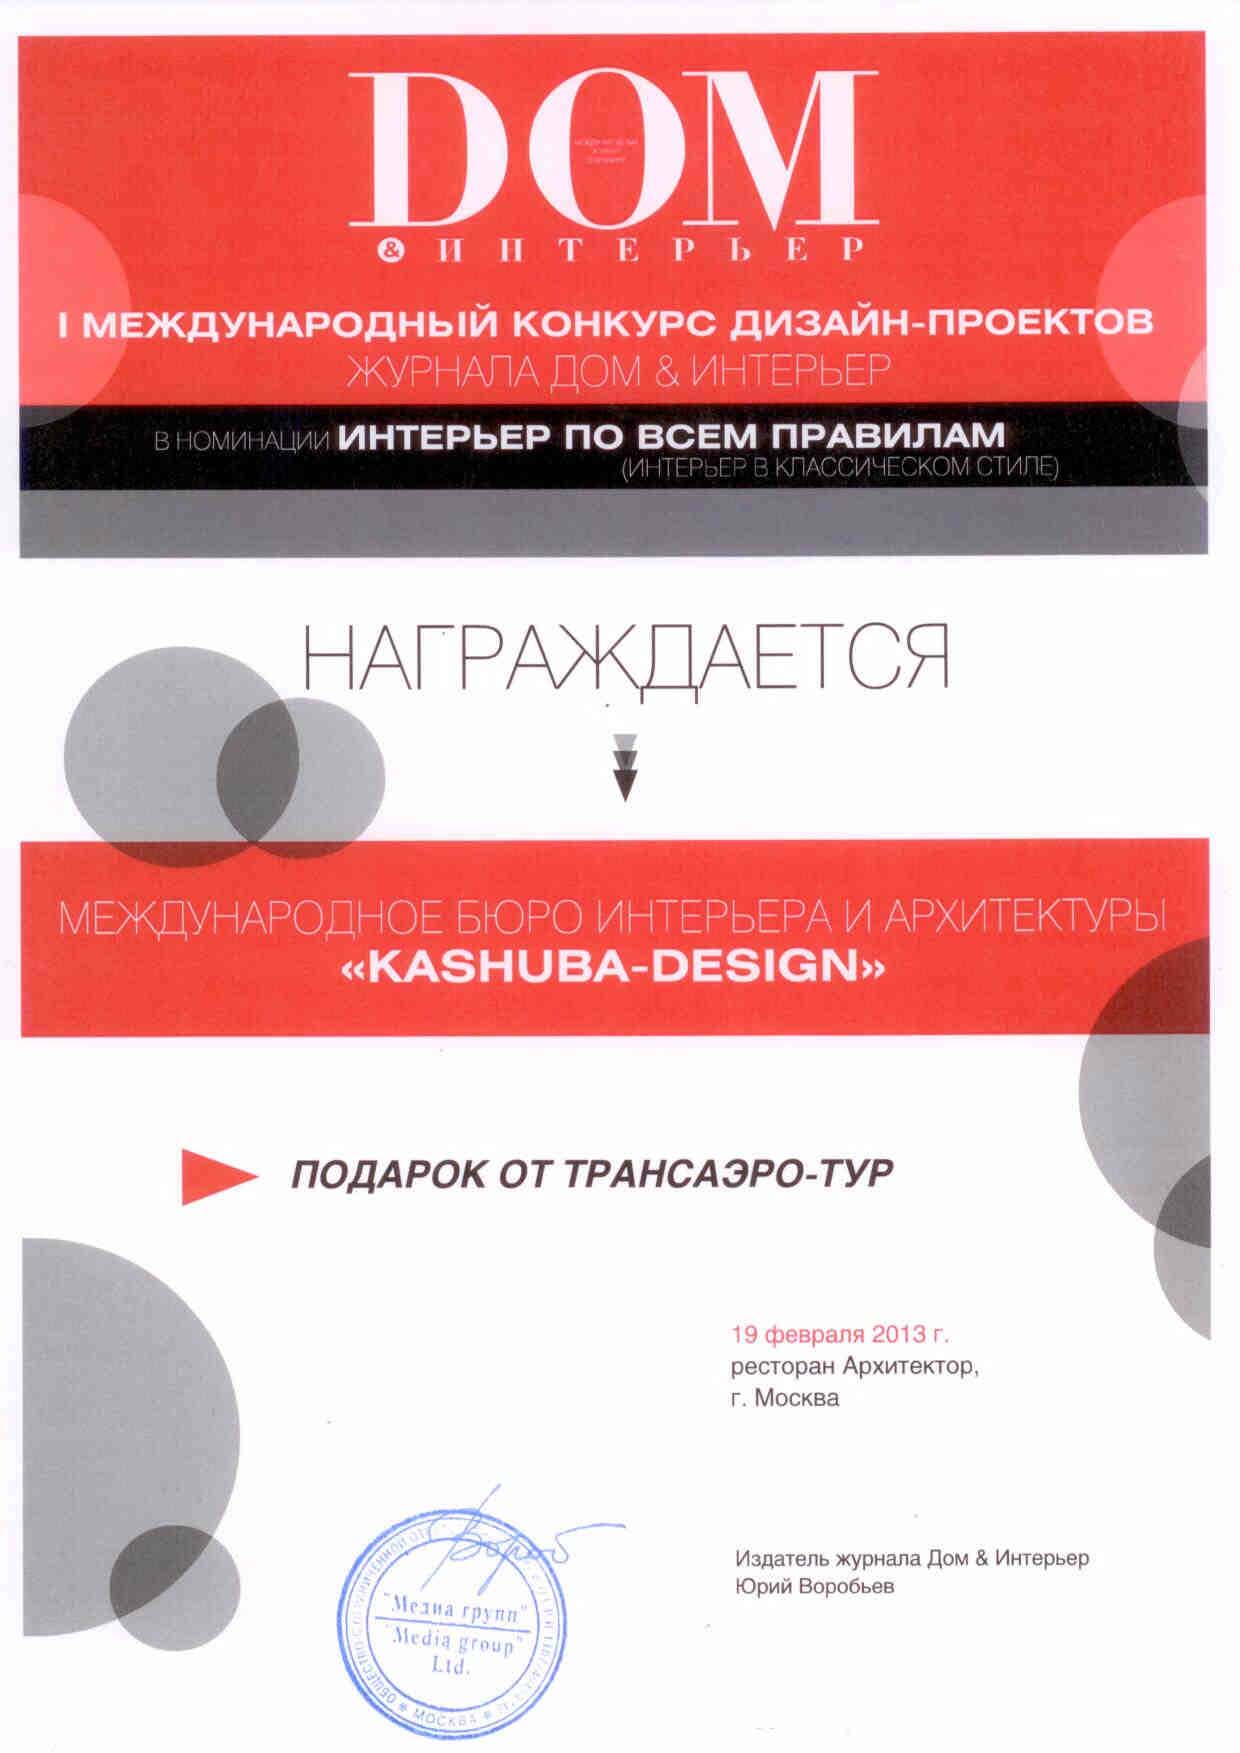 Дизайн студия Москва